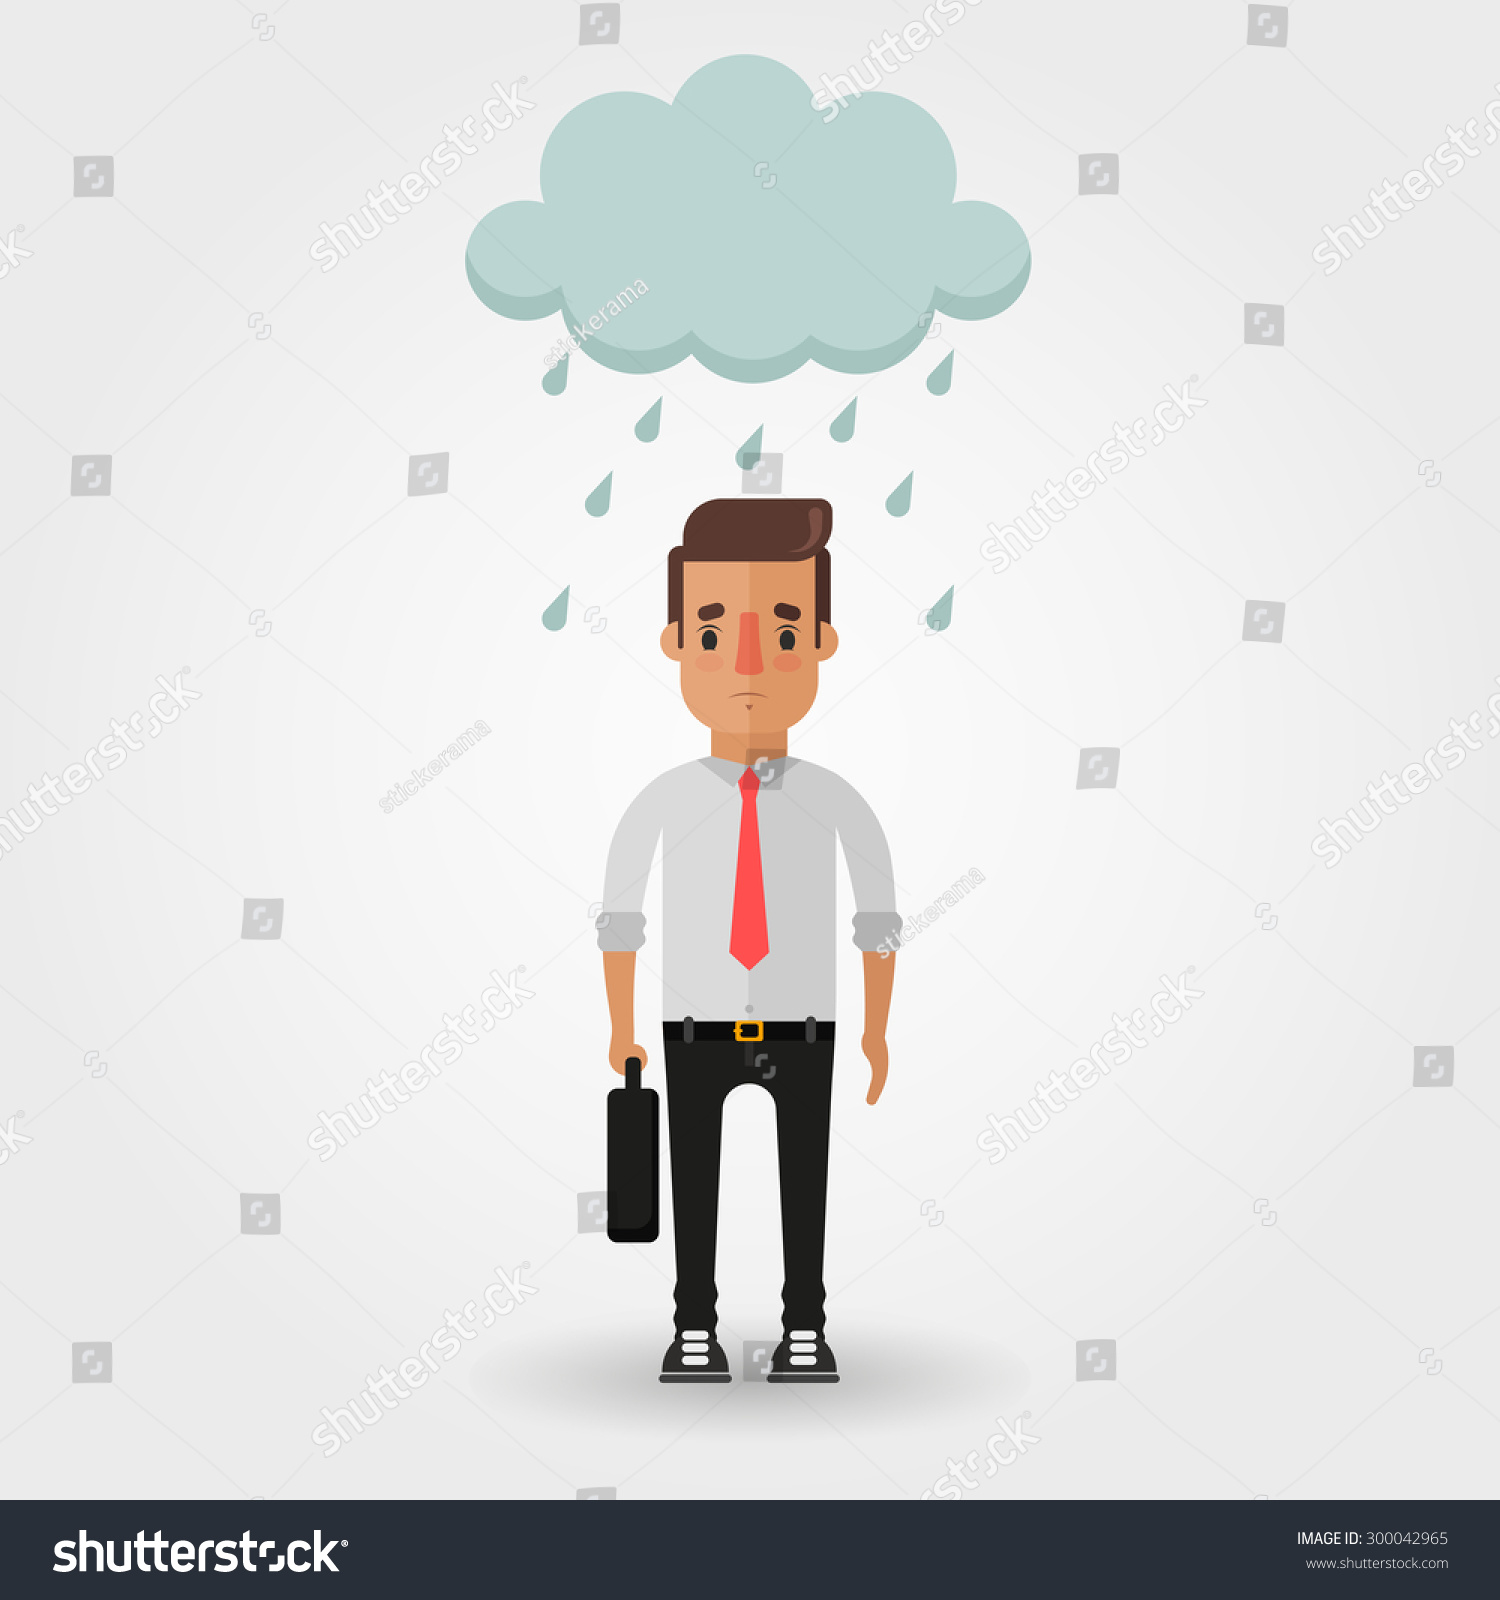 Sad Cartoon Office Worker Under the Rainy Cloud. Bad Day Concept #300042965